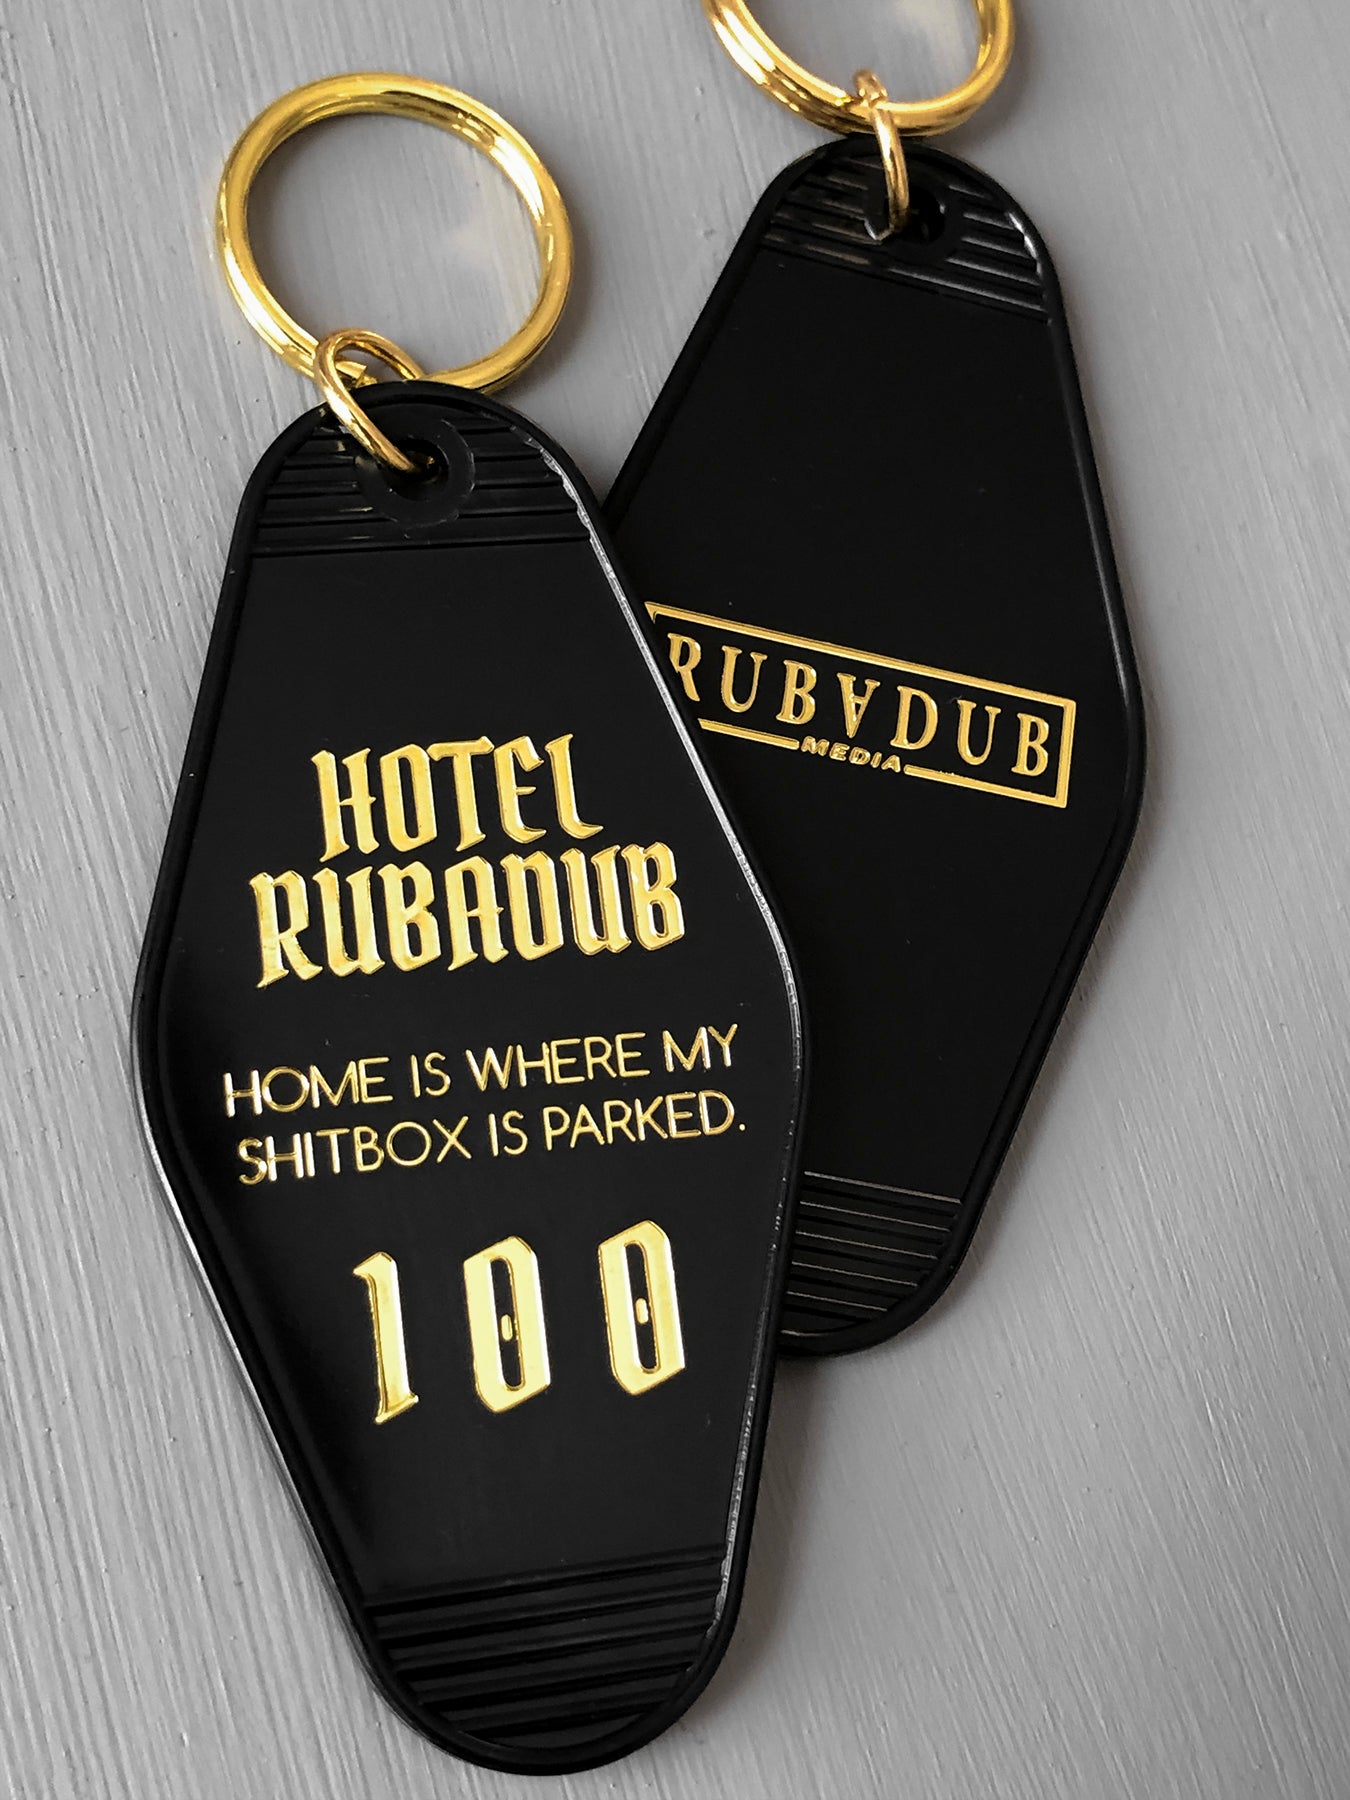 rubadub media hotel keychain